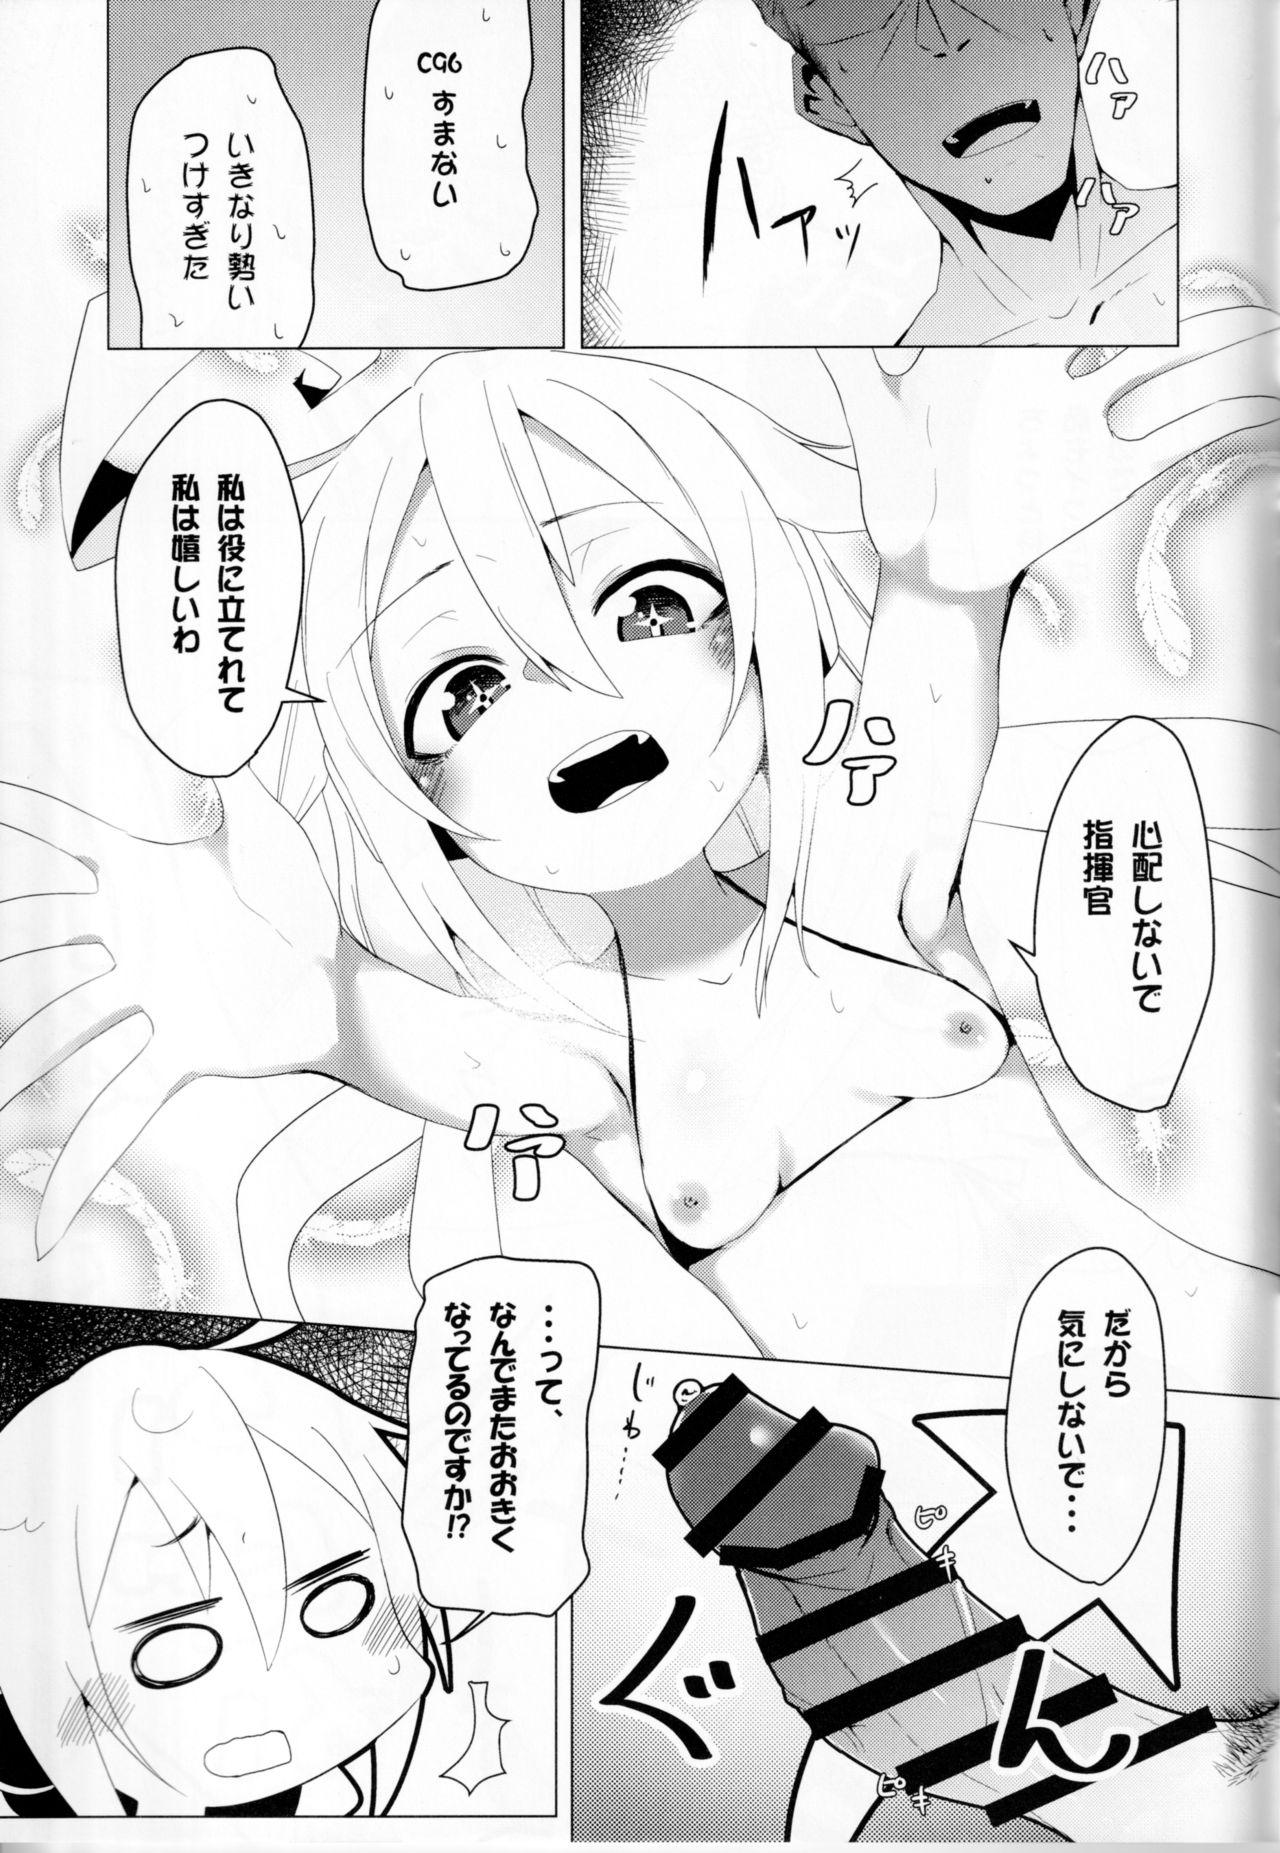 Analfucking C96-chan wa Atsu gari! - Girls frontline Animation - Page 12